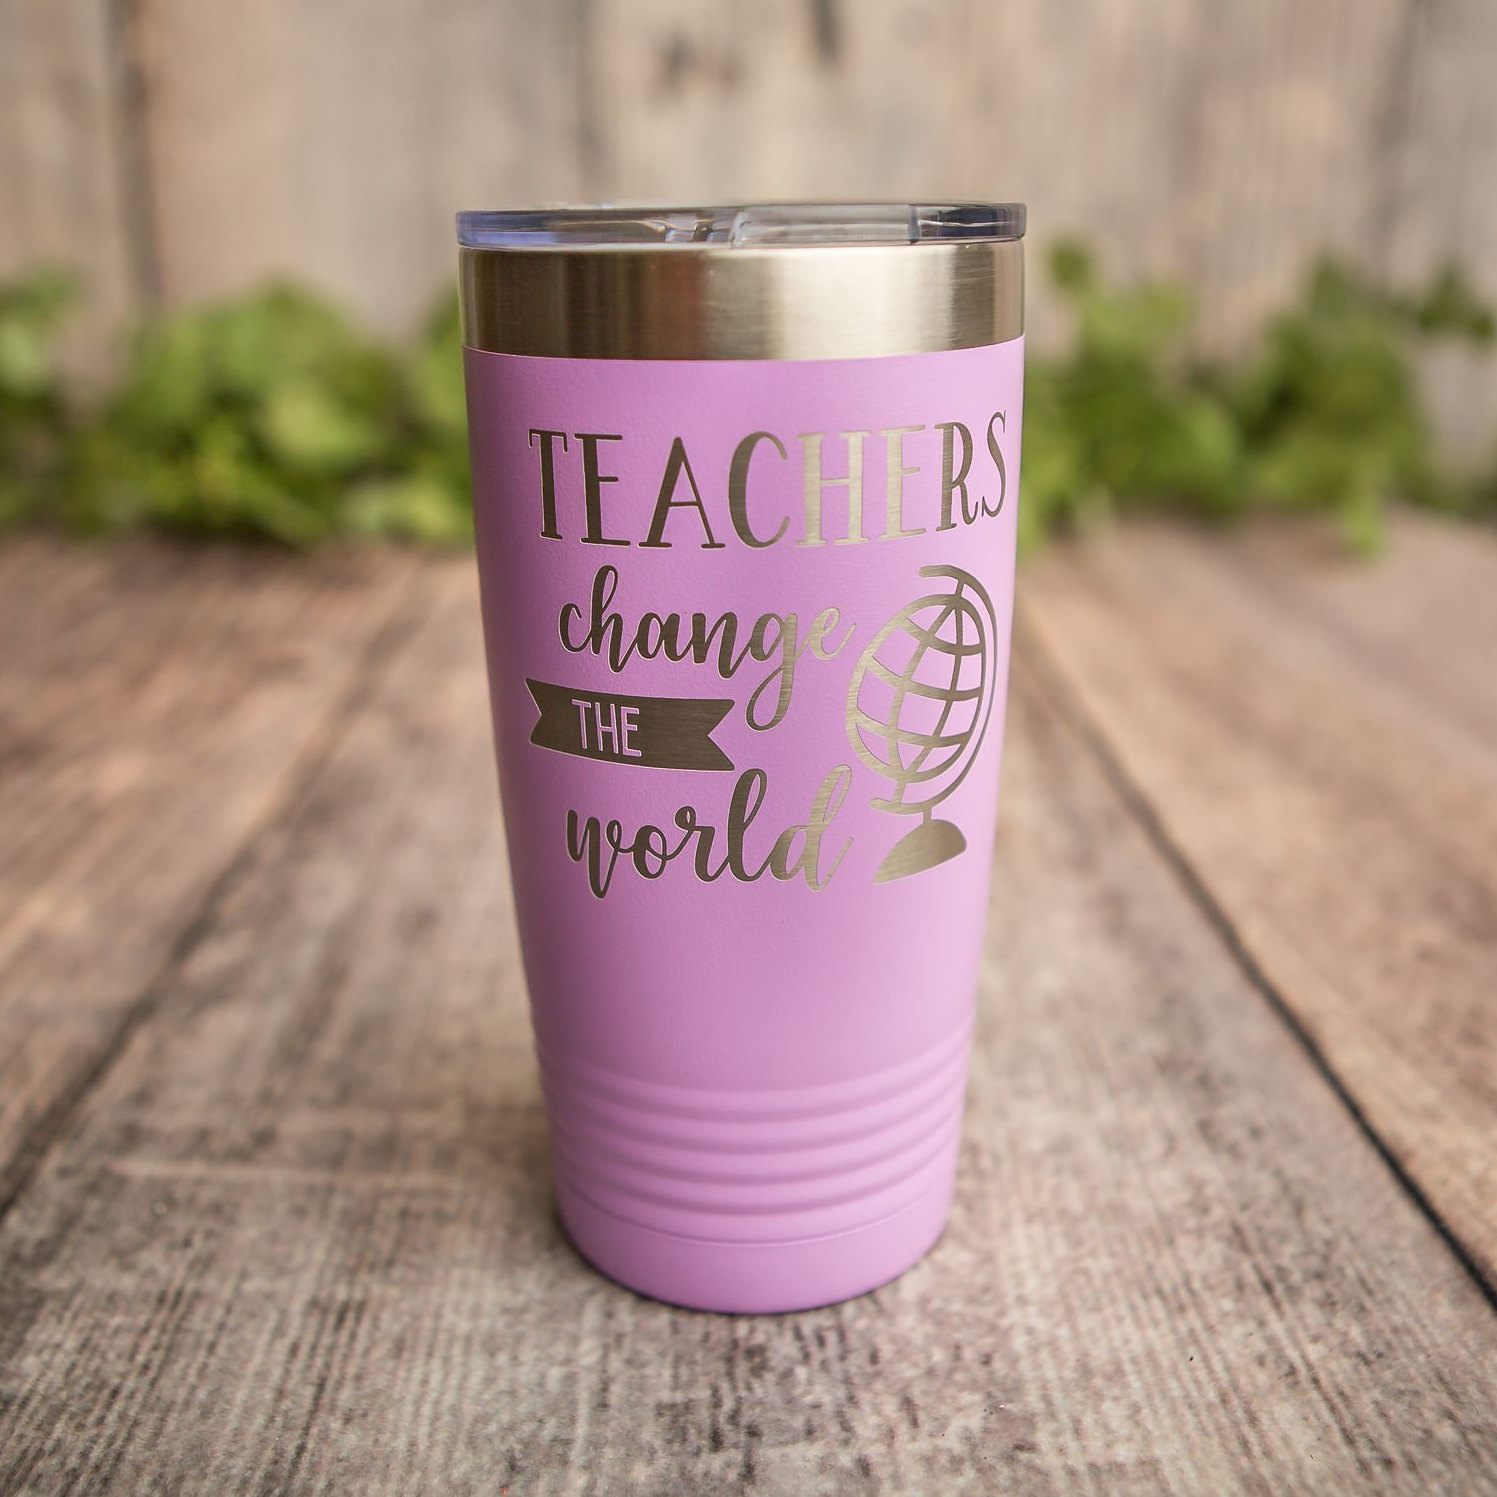 https://3cetching.com/wp-content/uploads/2020/09/teachers-change-the-world-engraved-polar-camel-stainless-steel-tumbler-teacher-graduation-gift-teacher-travel-mug-5f5fc075.jpg